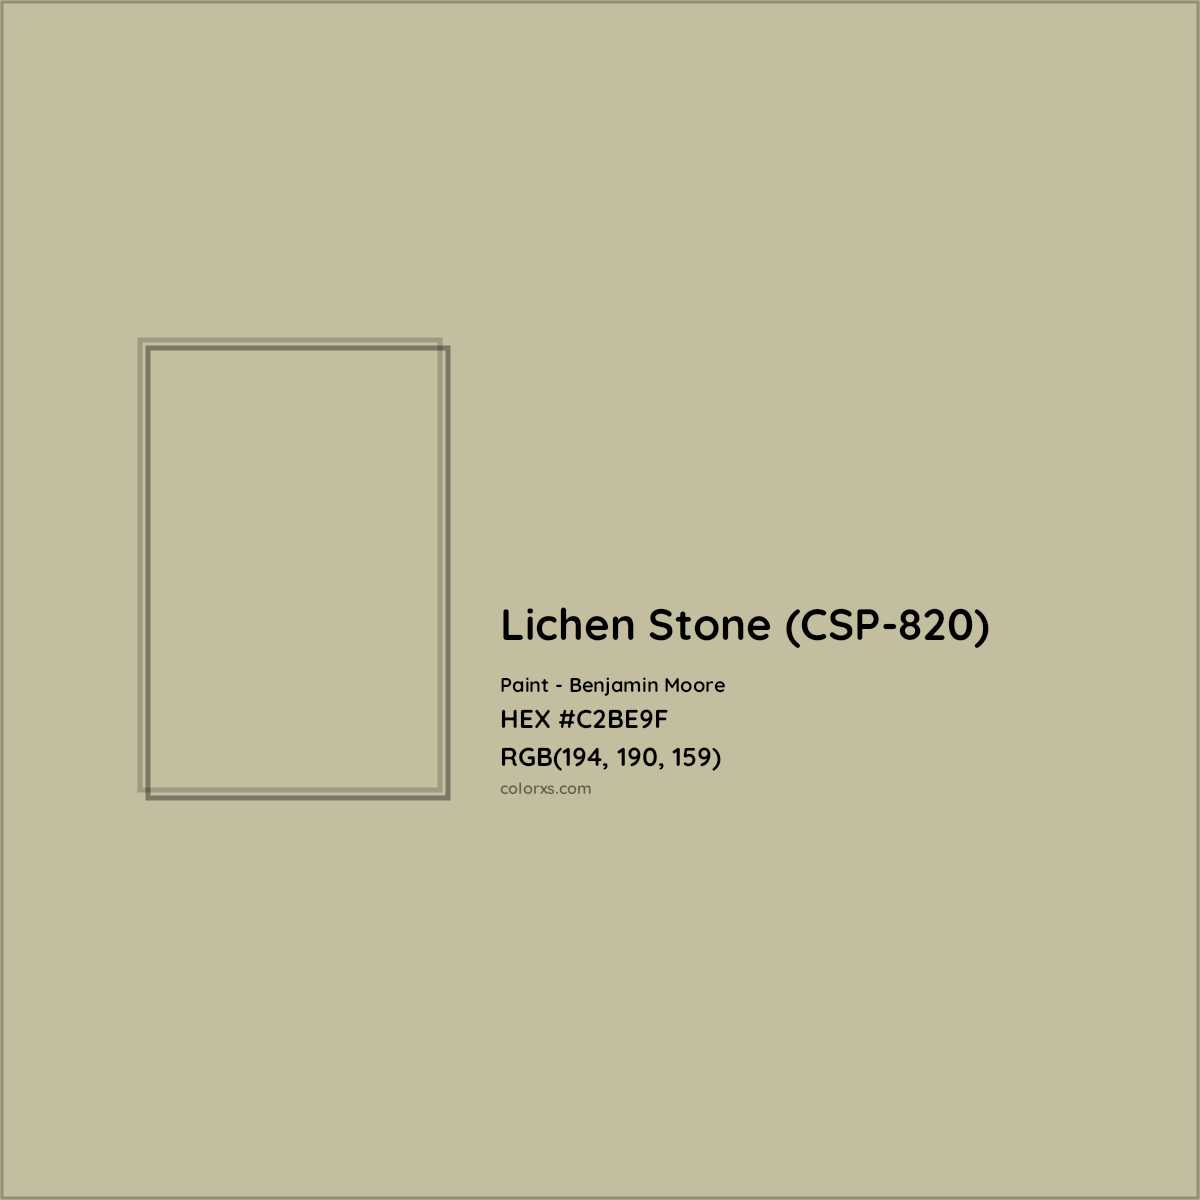 HEX #C2BE9F Lichen Stone (CSP-820) Paint Benjamin Moore - Color Code